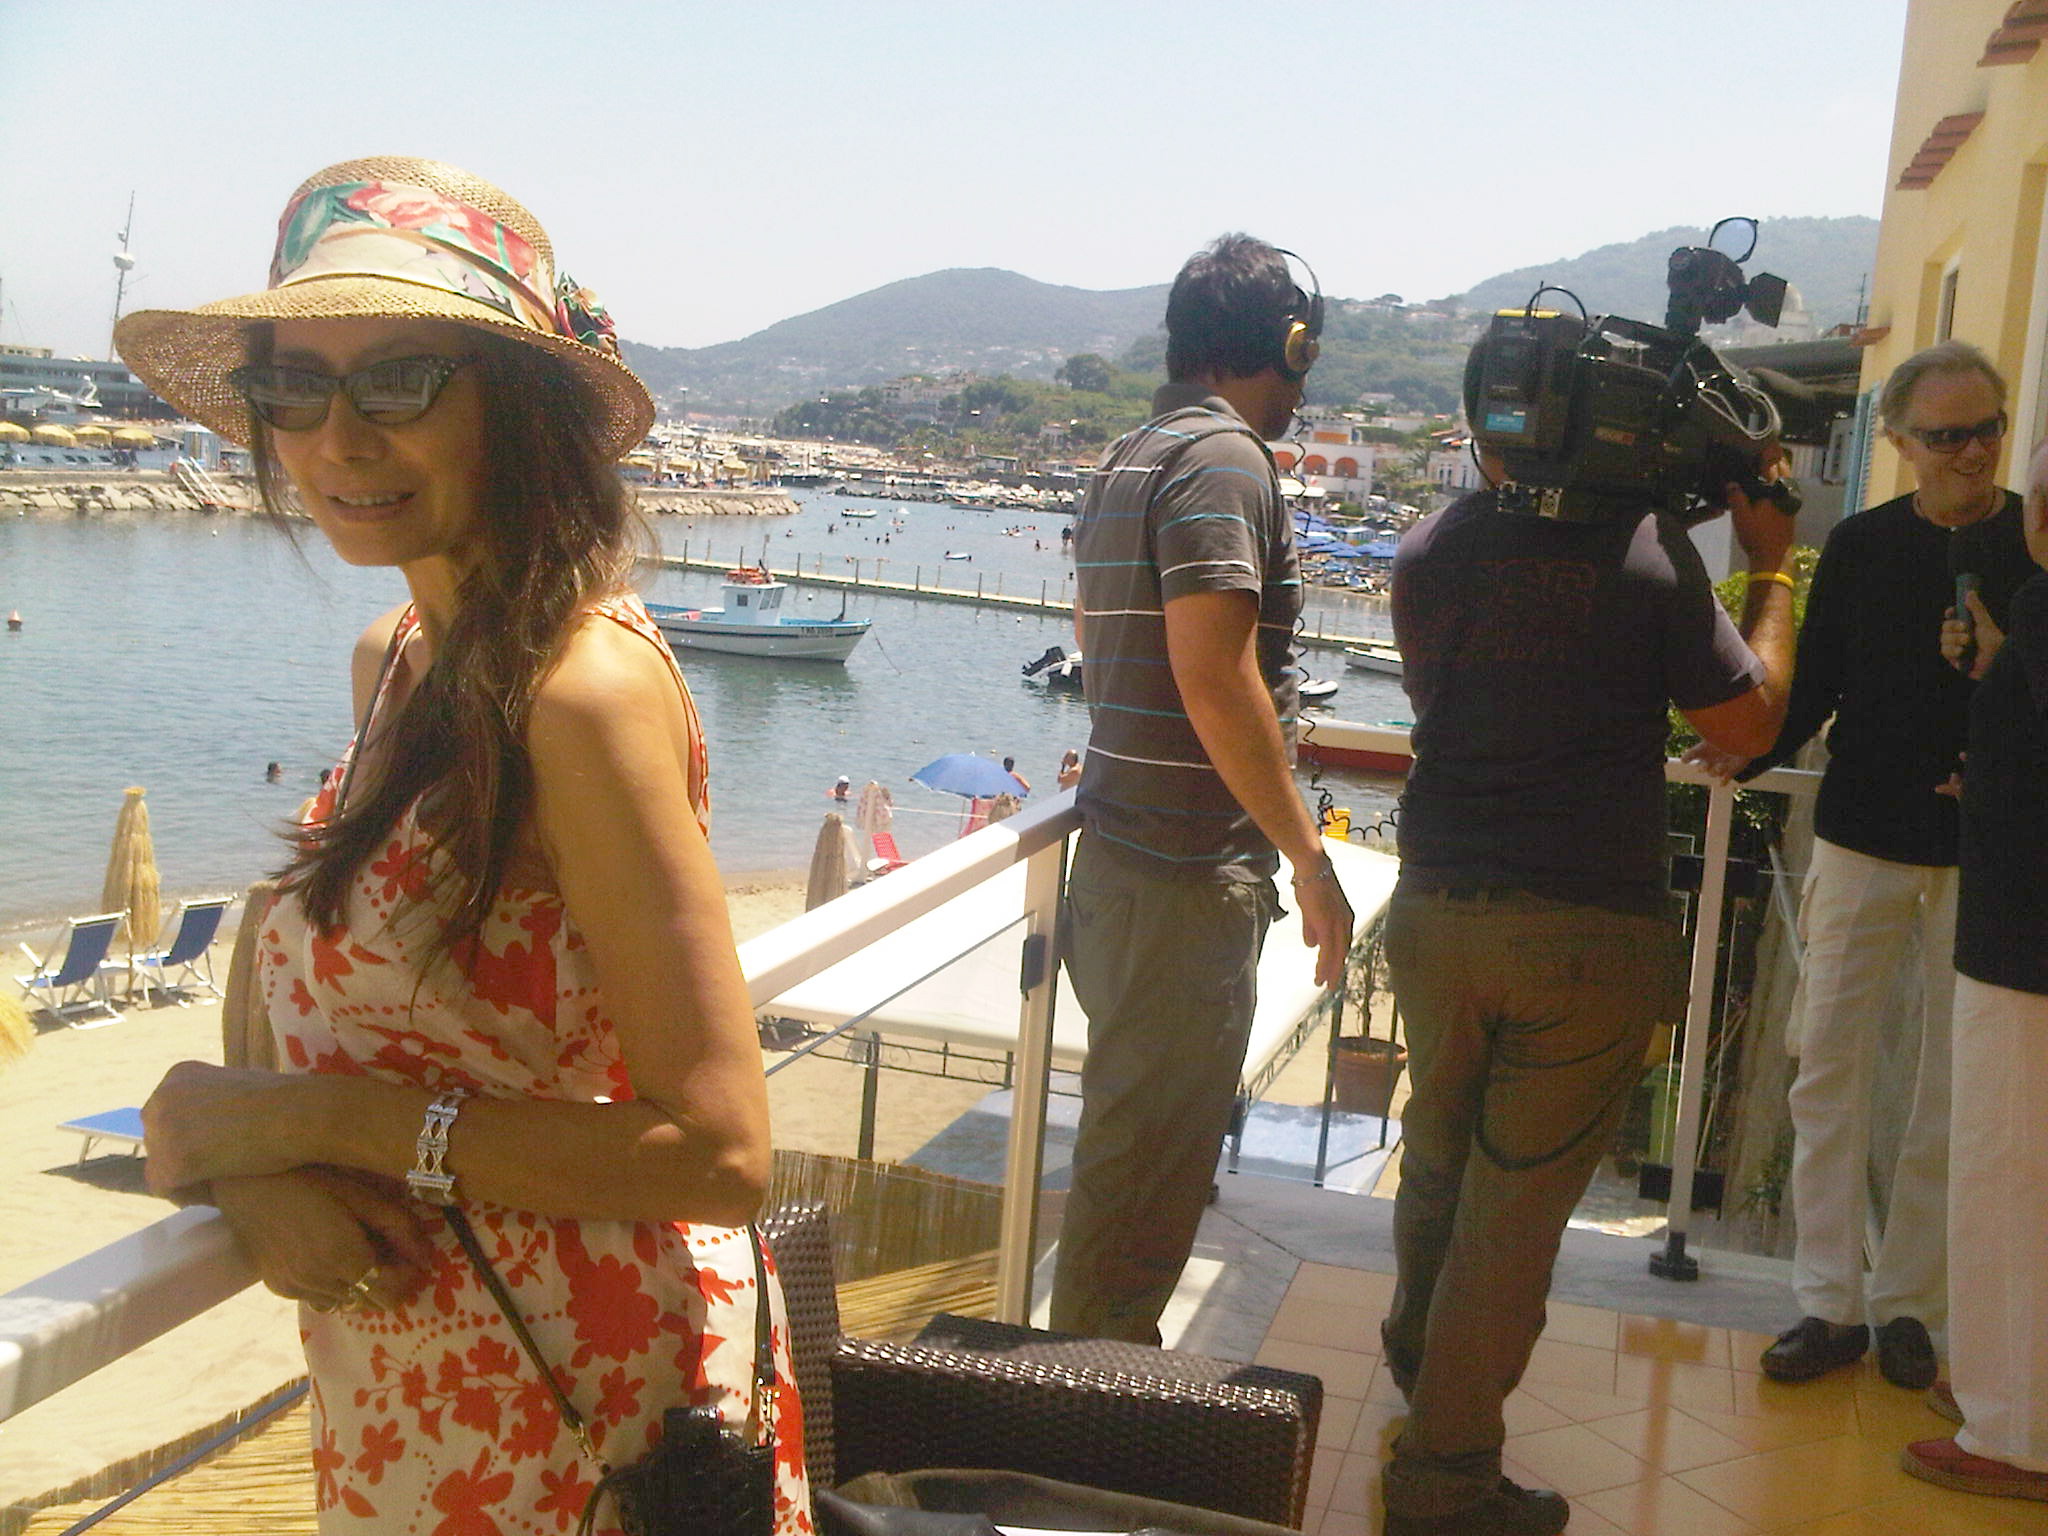 Cassandra Gava, Peter Fonda, Ischia,Italy, July, 2010.